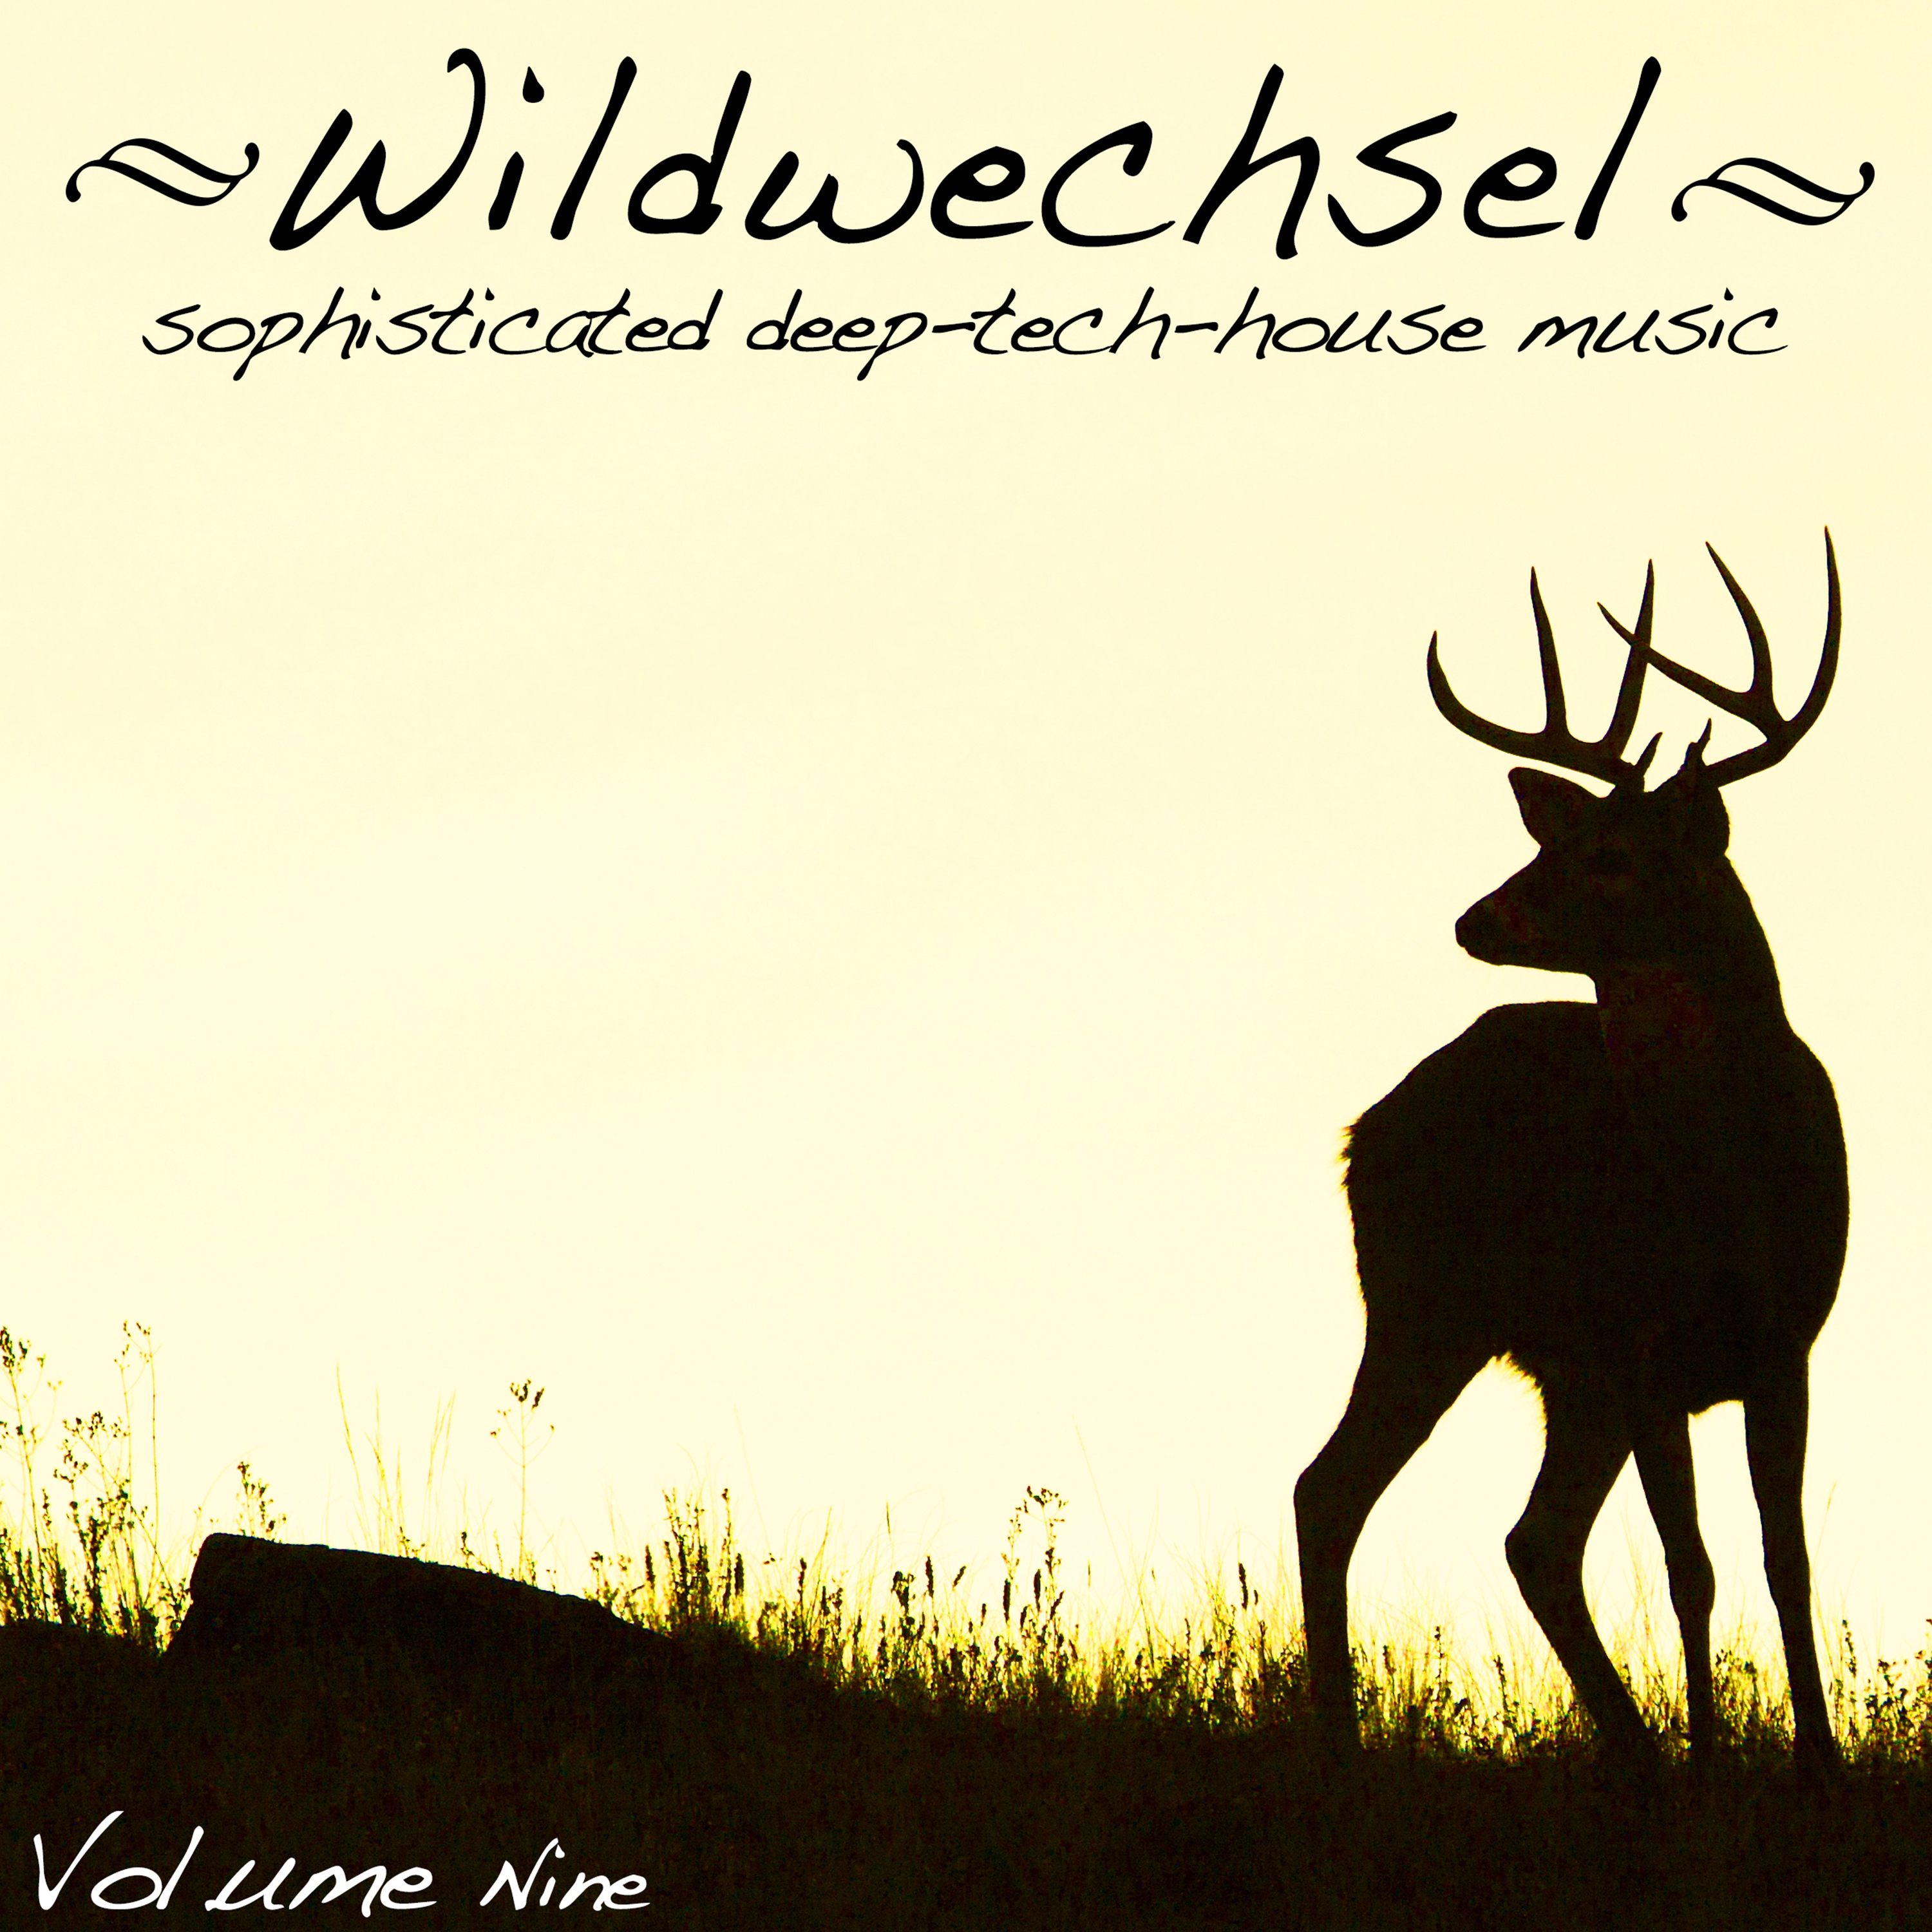 Wildwechsel, Vol. 9 - Sophisticated Deep Tech-House Music